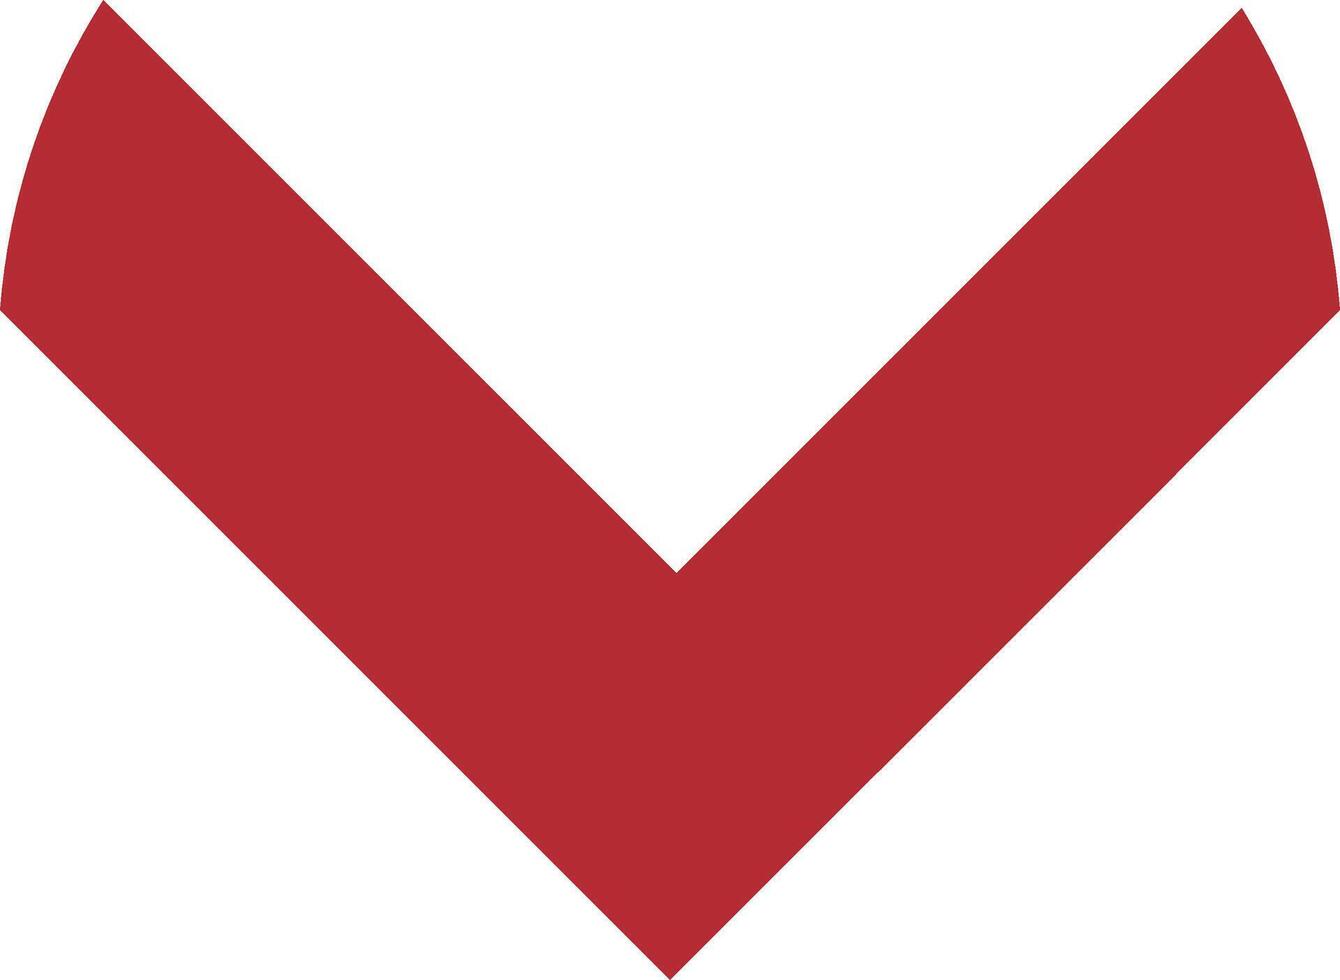 Decorative v shape for logo vector